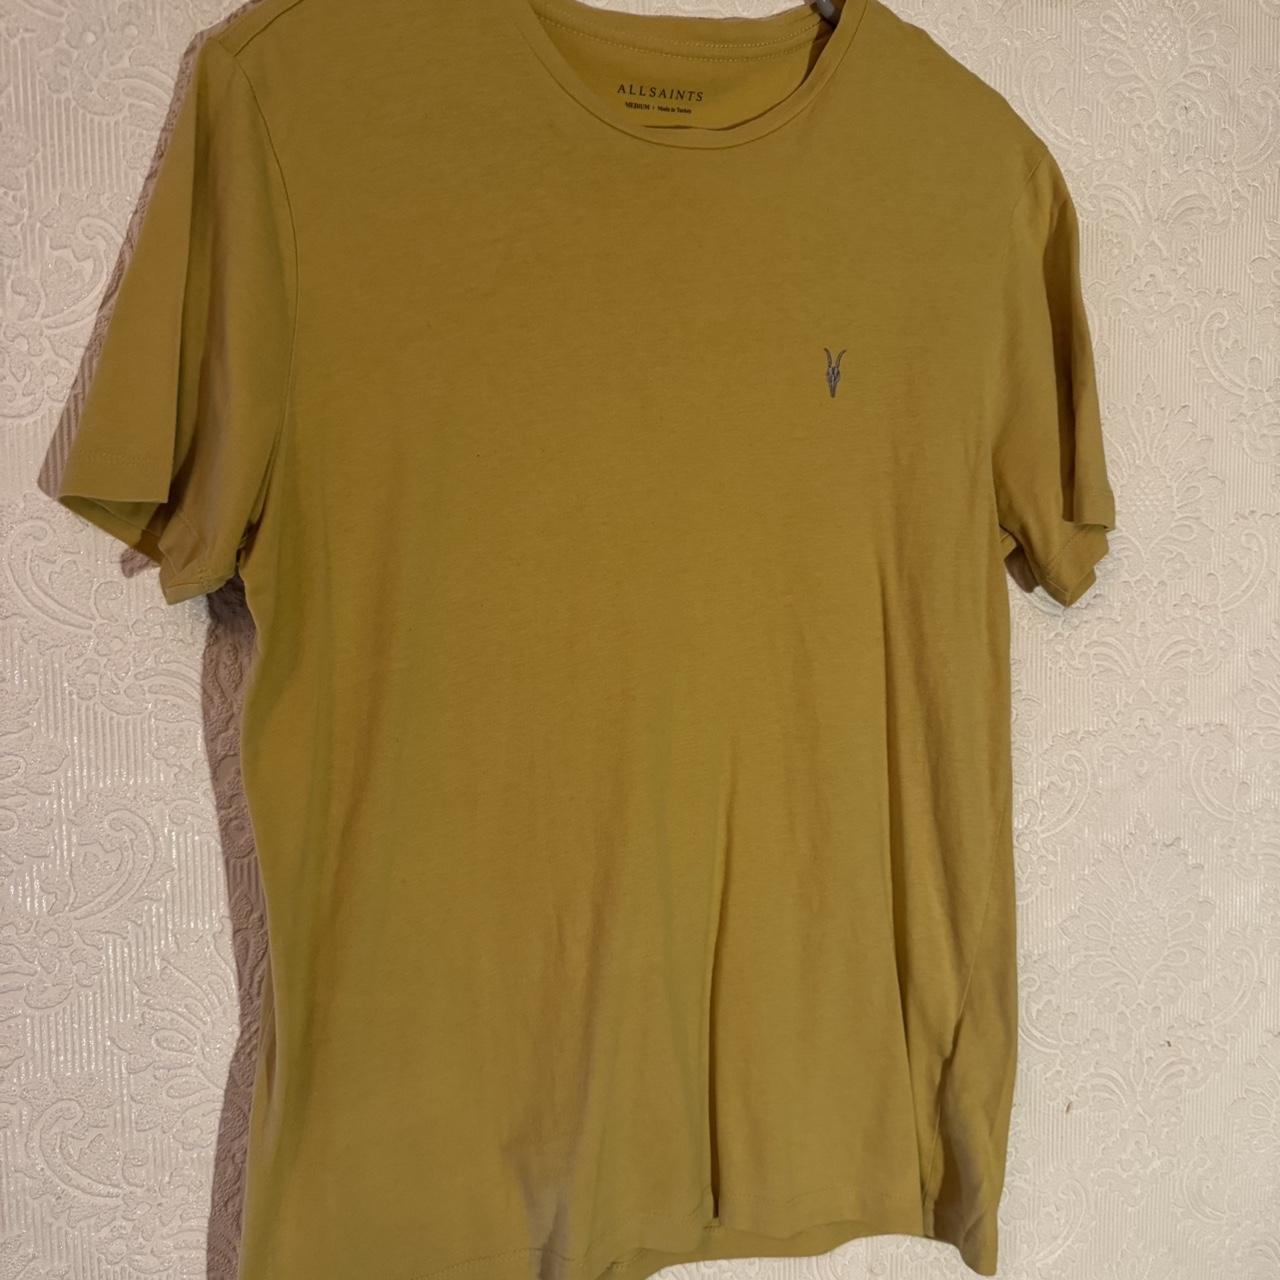 AllSaints Mustard Yellow T shirt. Size M Excellent... - Depop